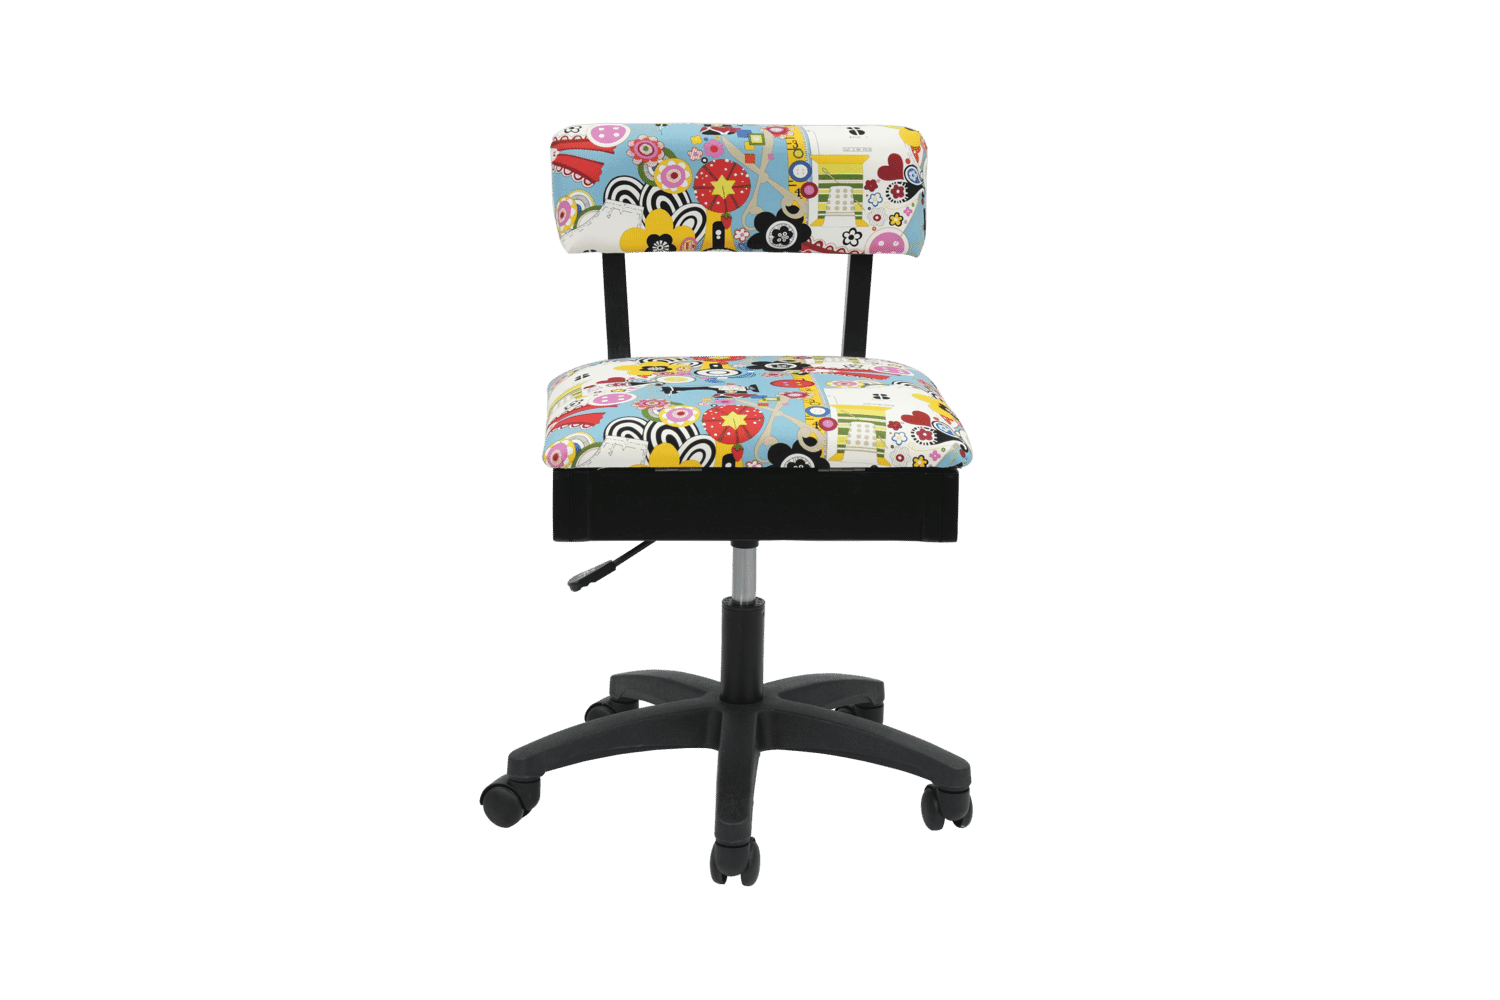 Sew Wow Sew Now Hydraulic Sewing Chair, Arrows Hydraulic Chairs